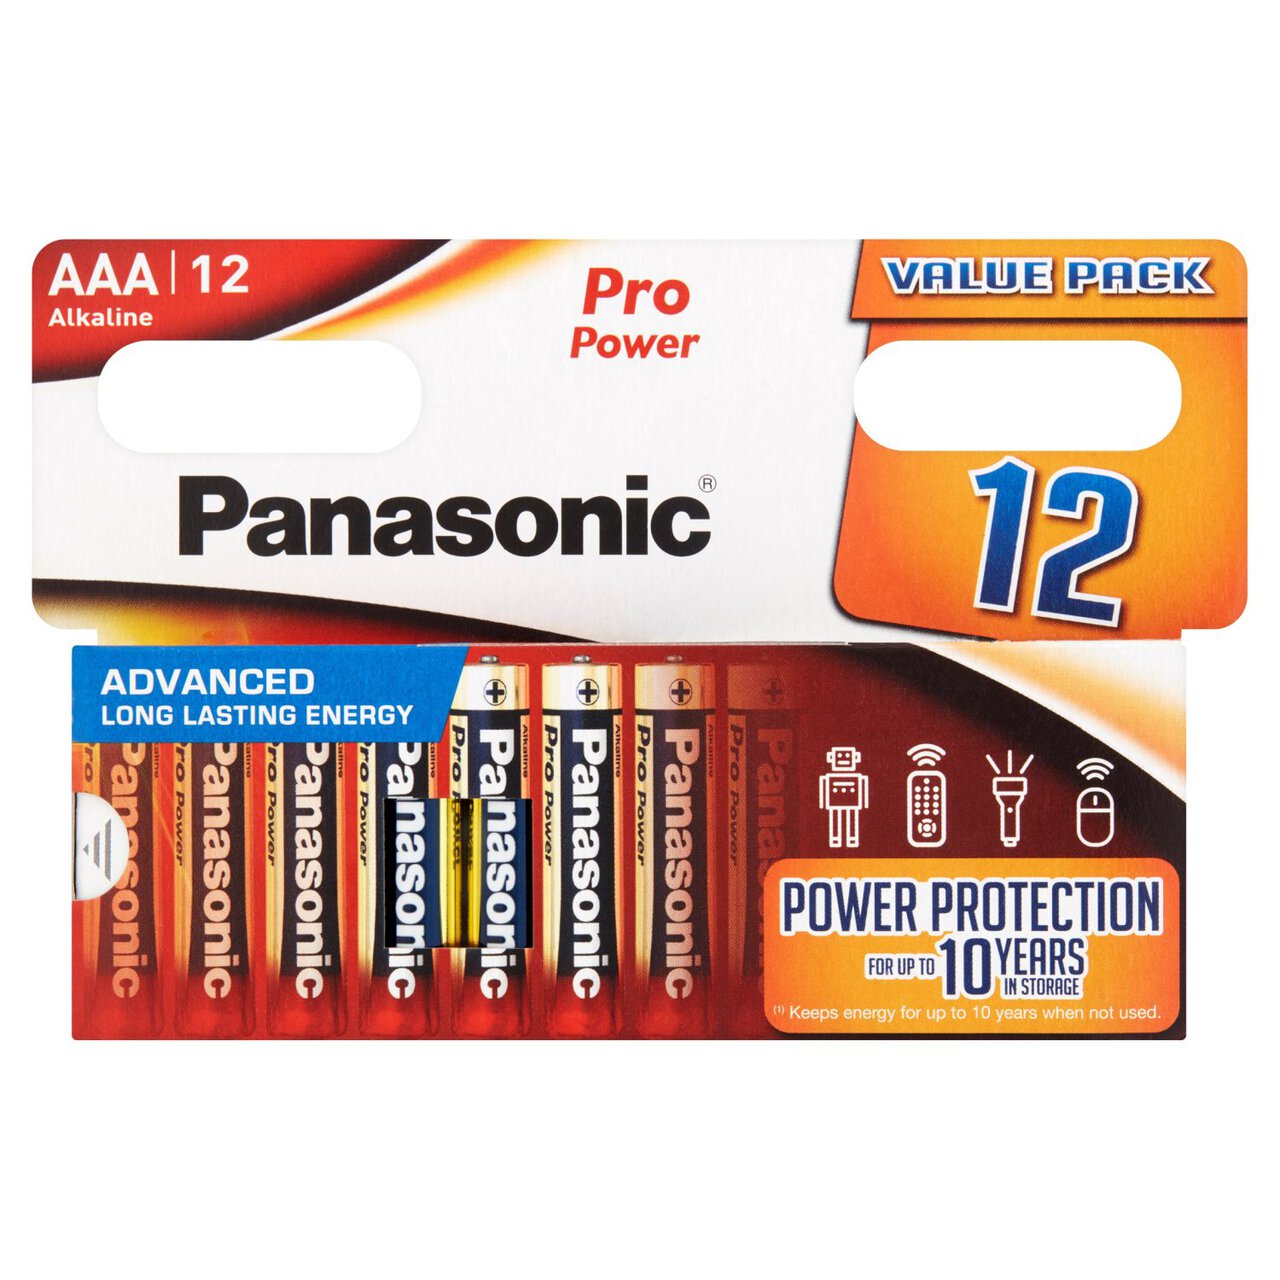 Panasonic Pro Power AAA Batteries Alkaline 12 per pack